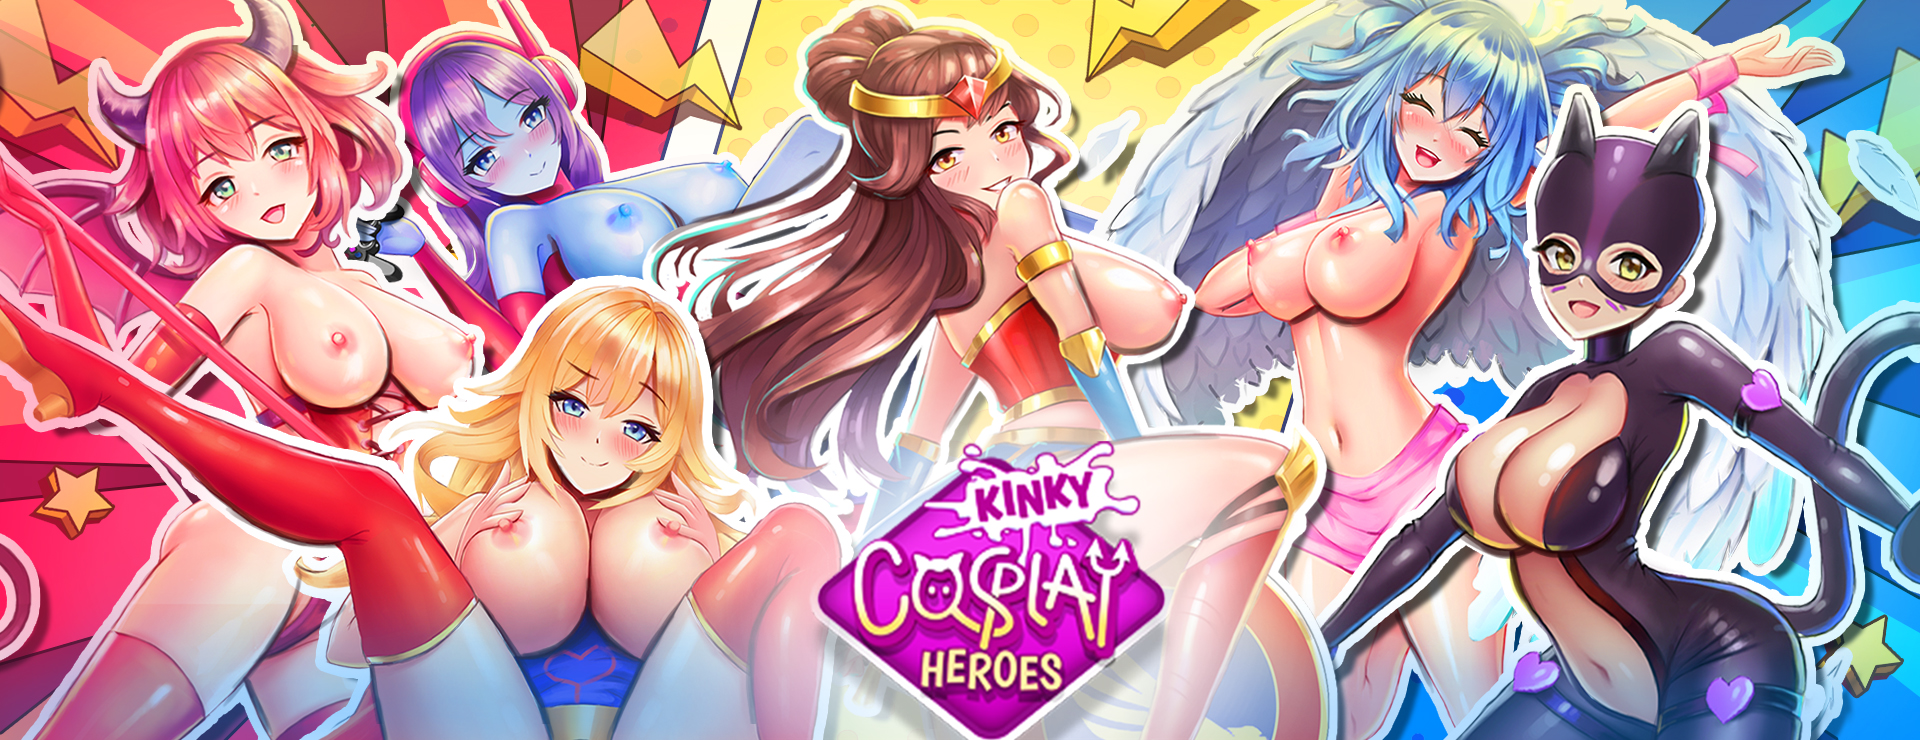 Kinky Cosplay Heroes - Zwanglos  Spiel